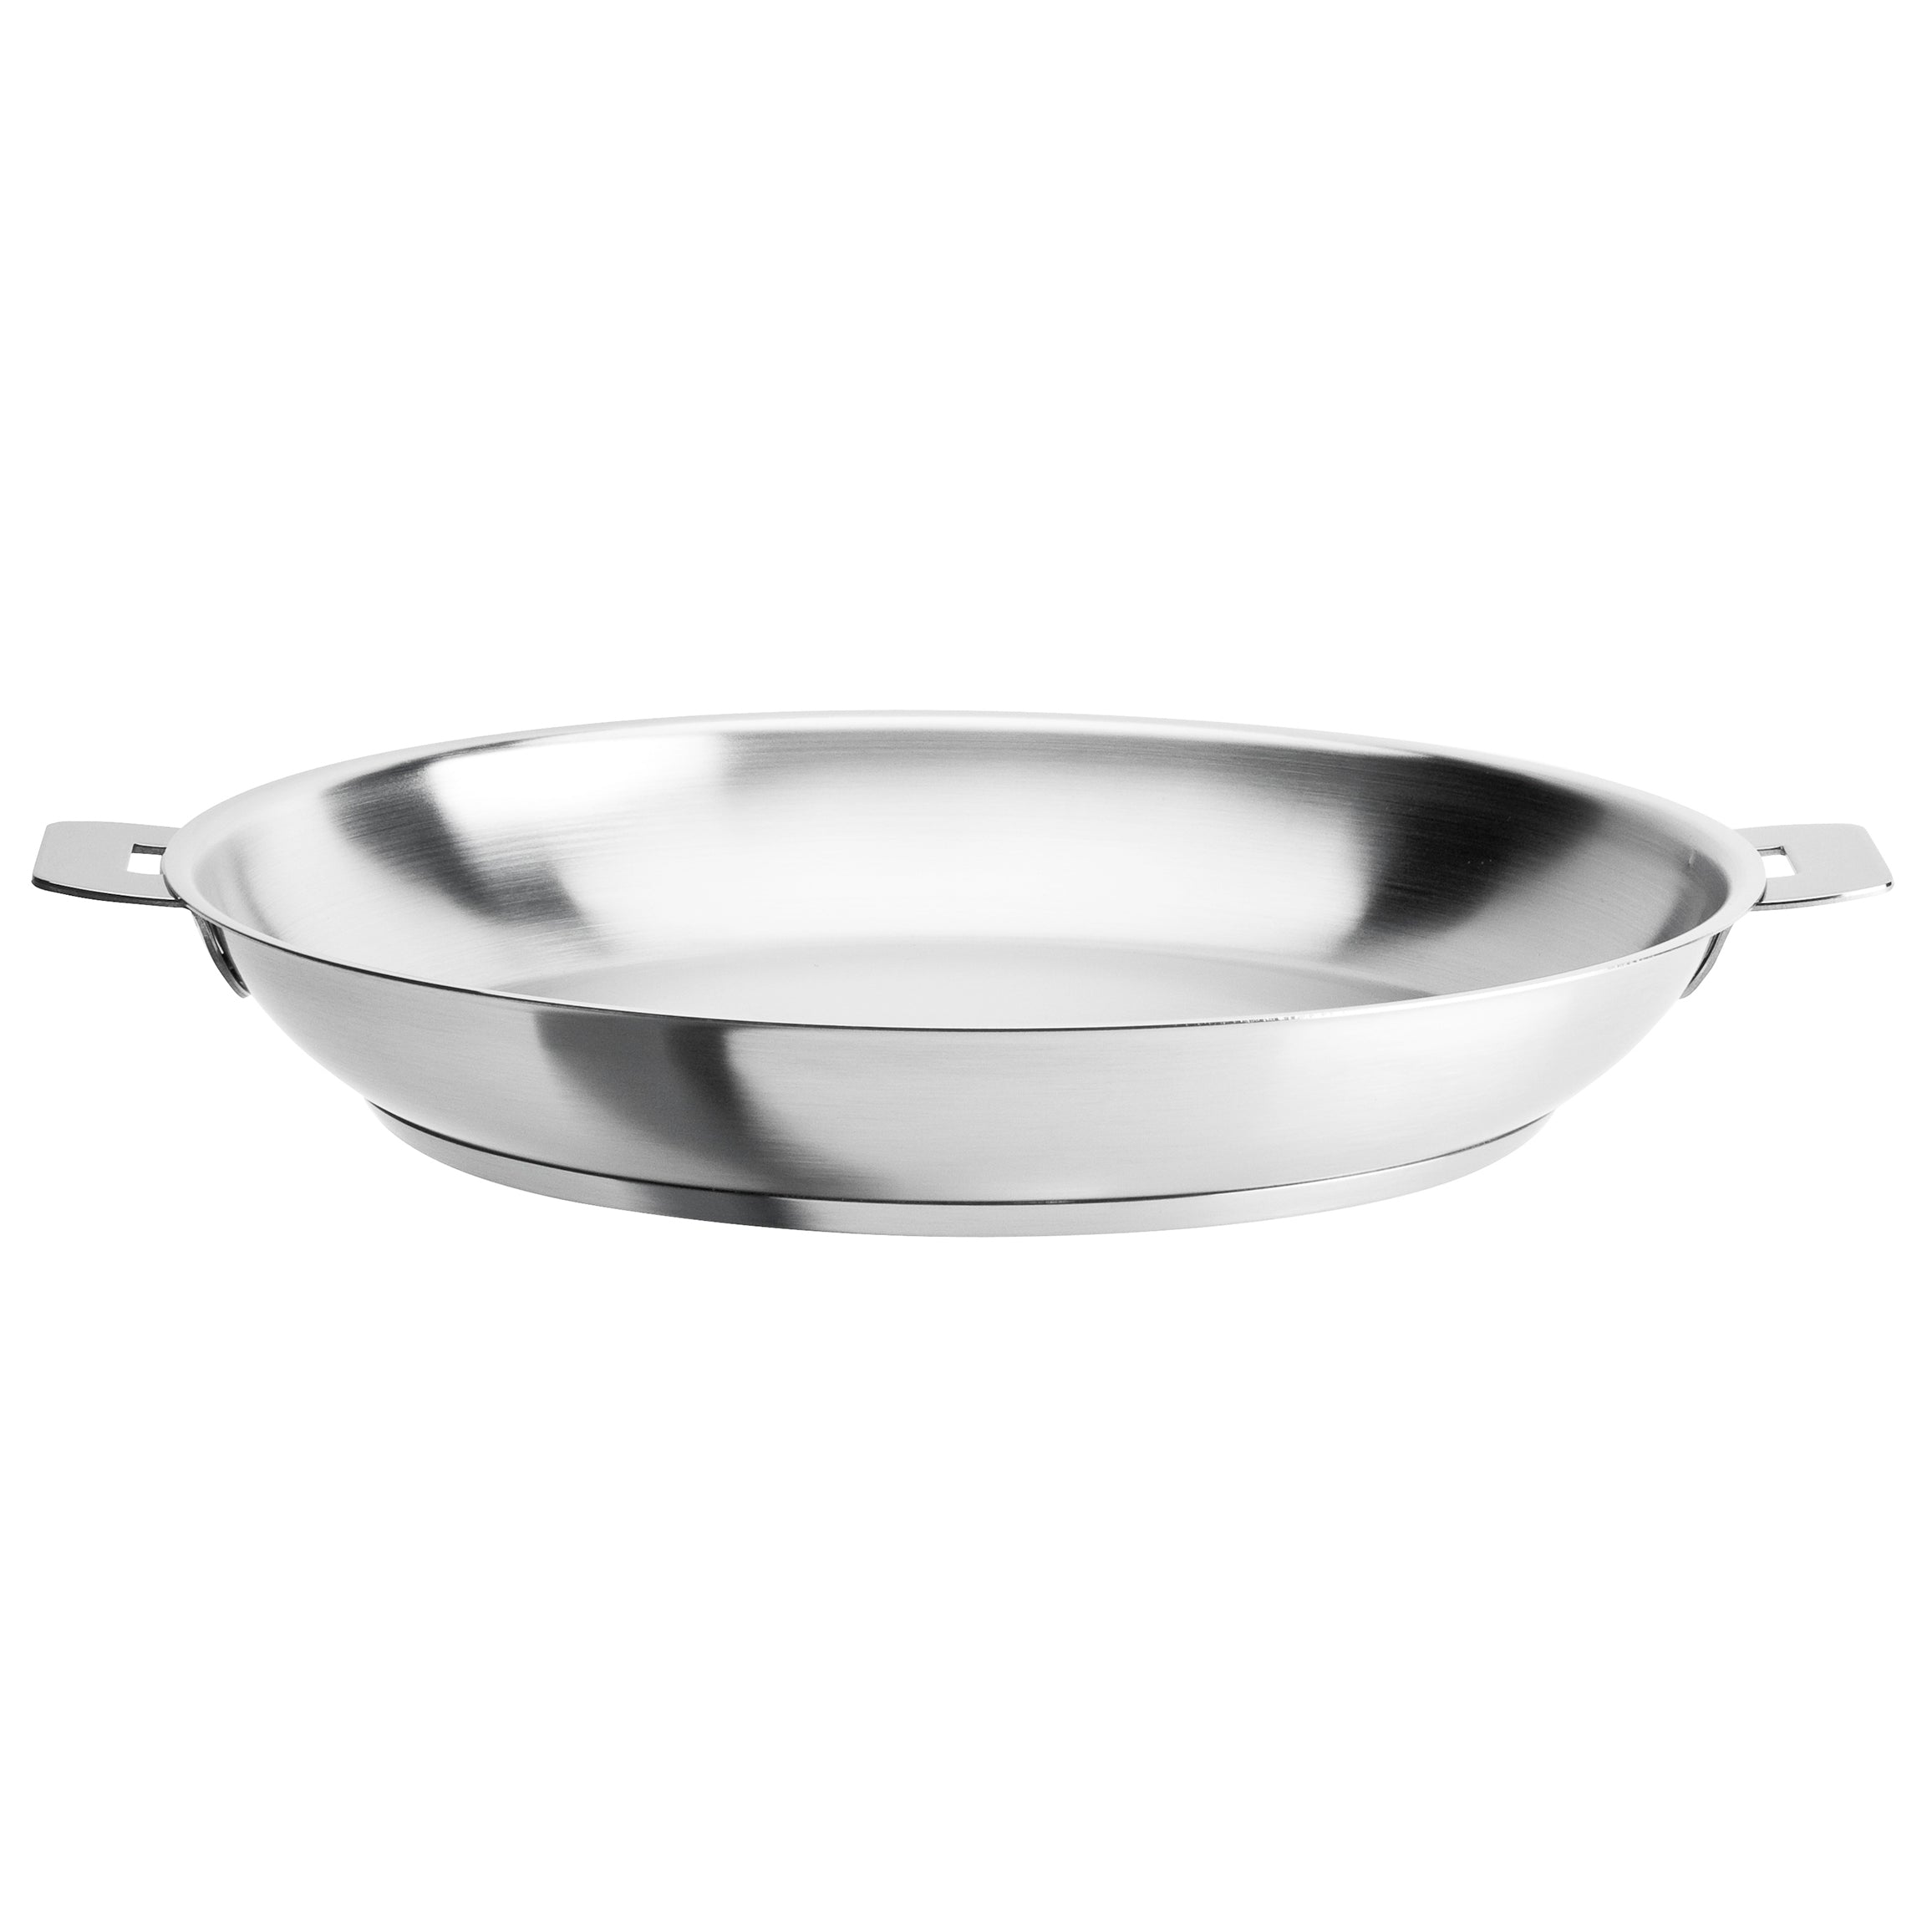 Best Buy: Rachael Ray Create Delicious 9.5-Inch Frying Pan Teal